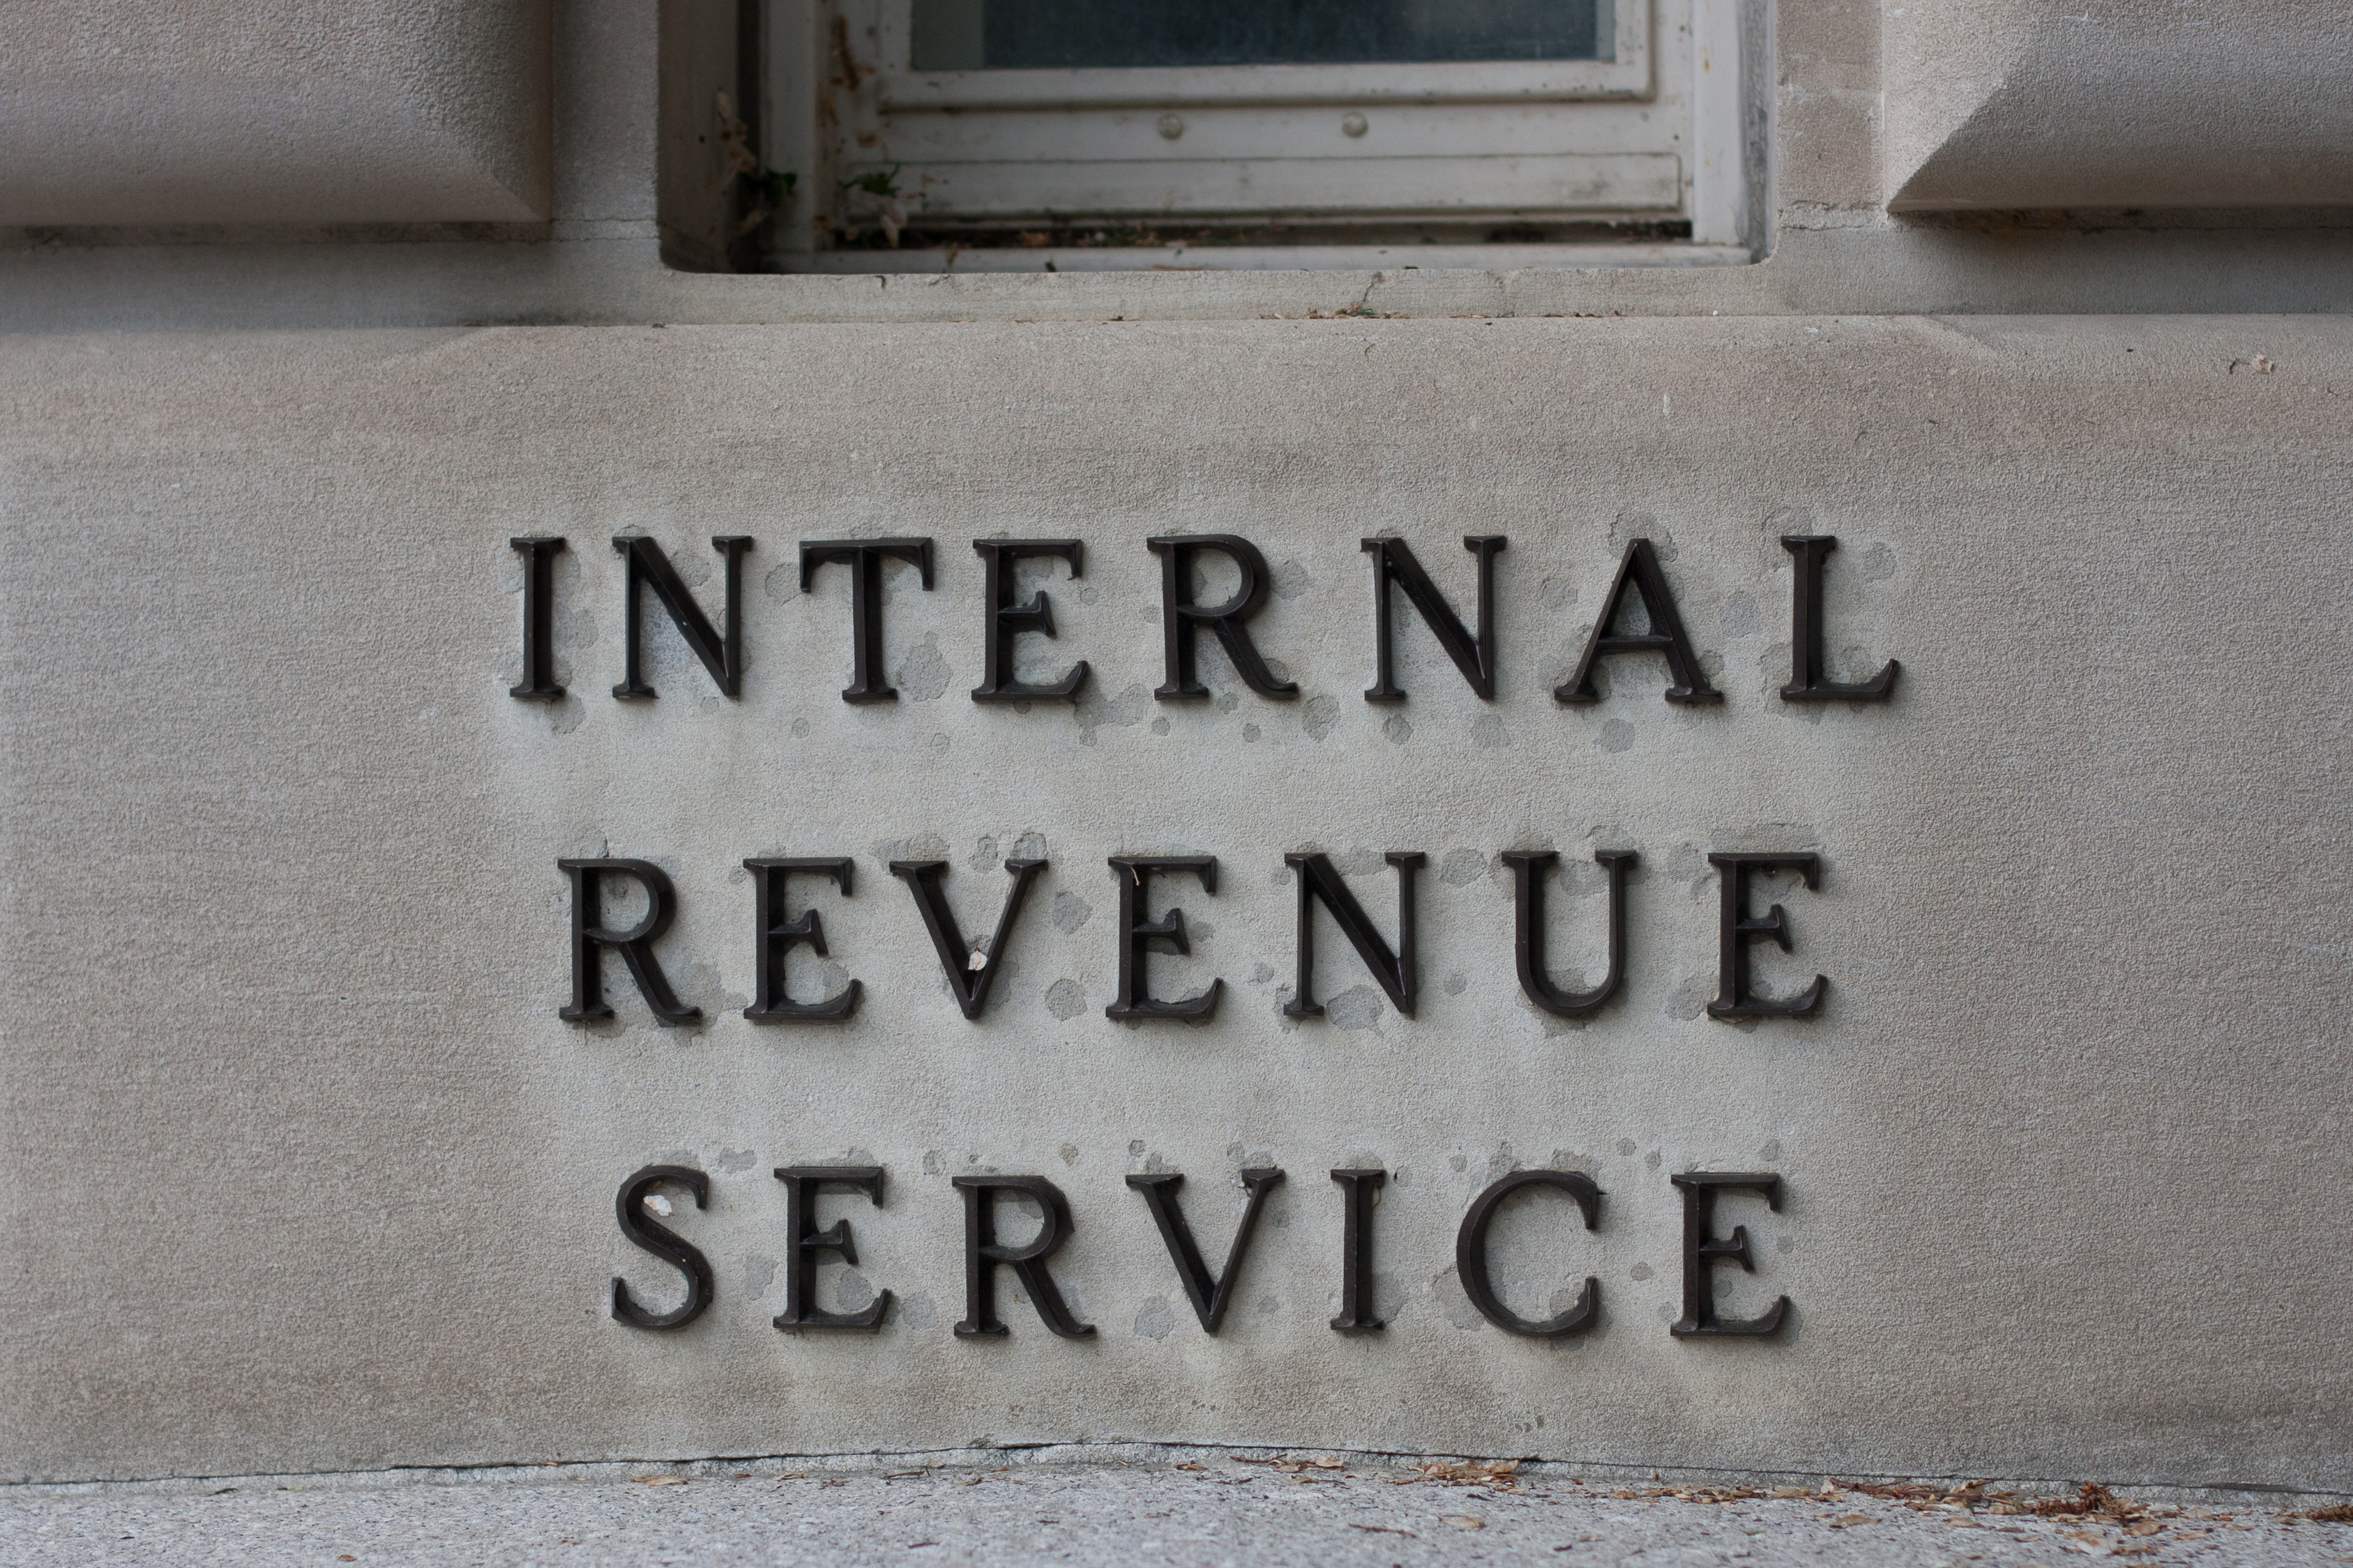 IRS Headquarters Sign in Washington, D.C.